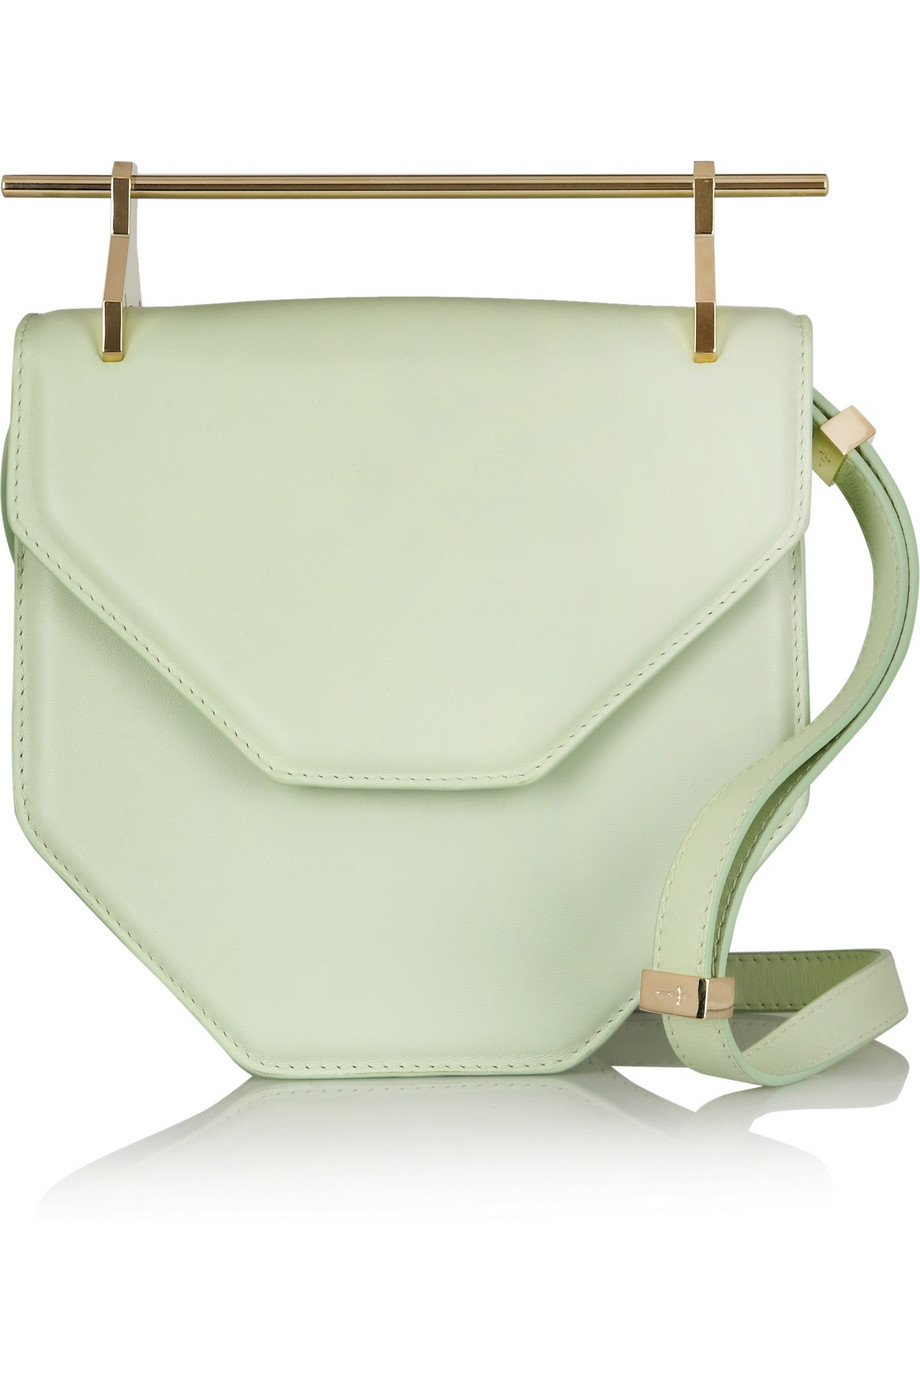 M2malletier Amor Fati Leather Shoulder Bag in Green | Lyst